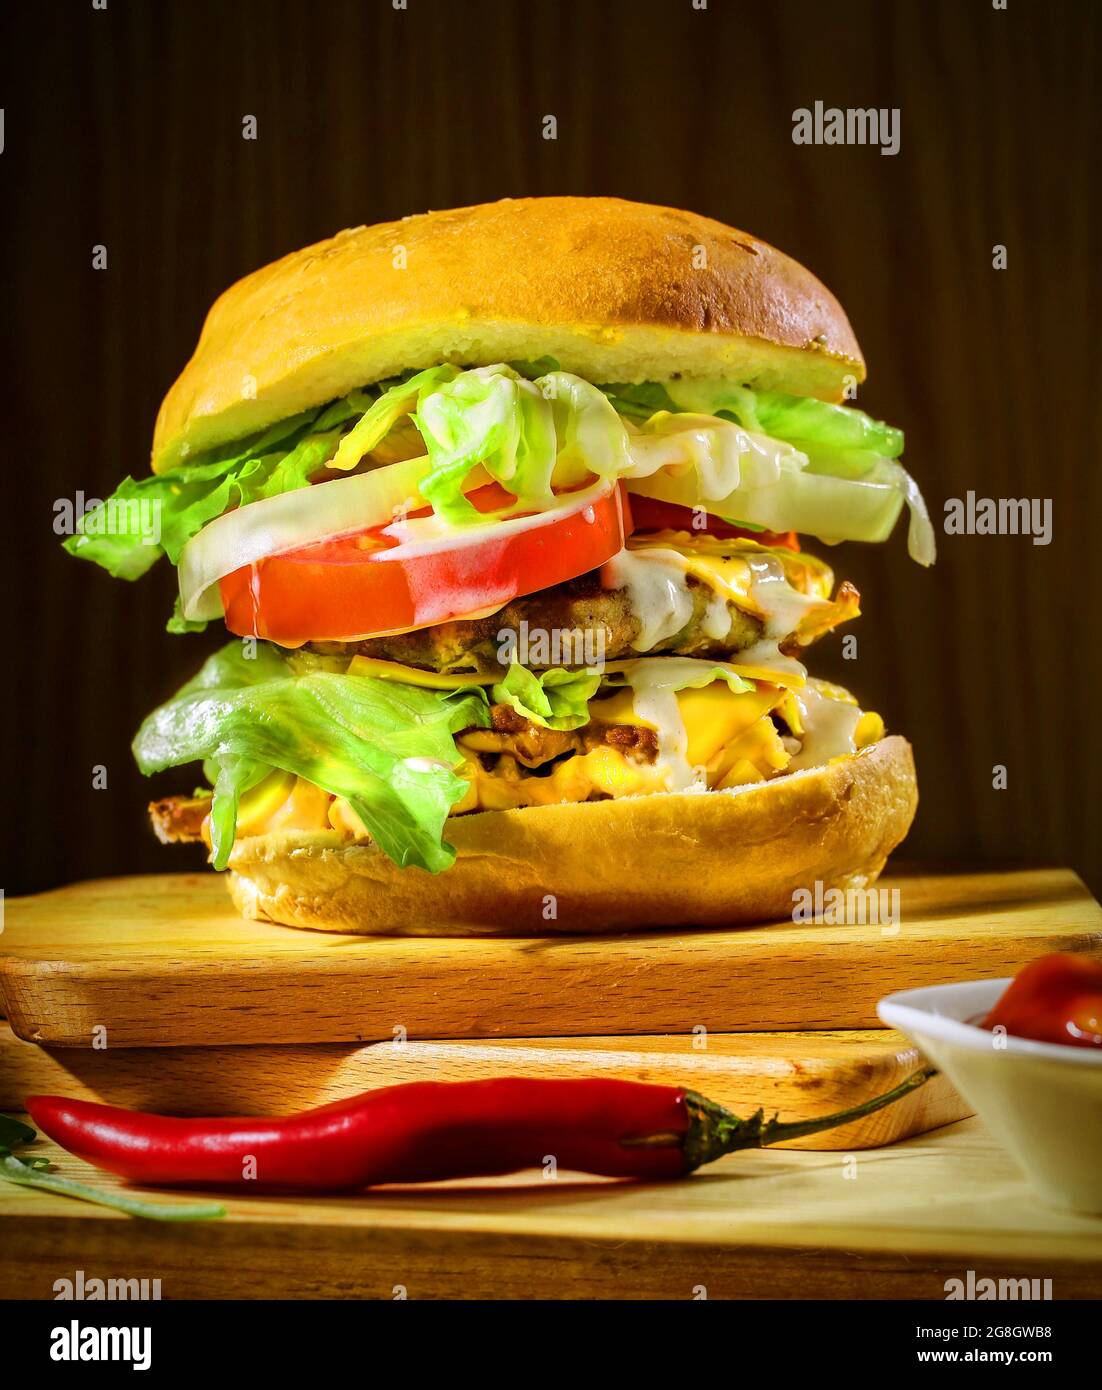 Fast Food (Pizza burger fries etc.) Stock Photo